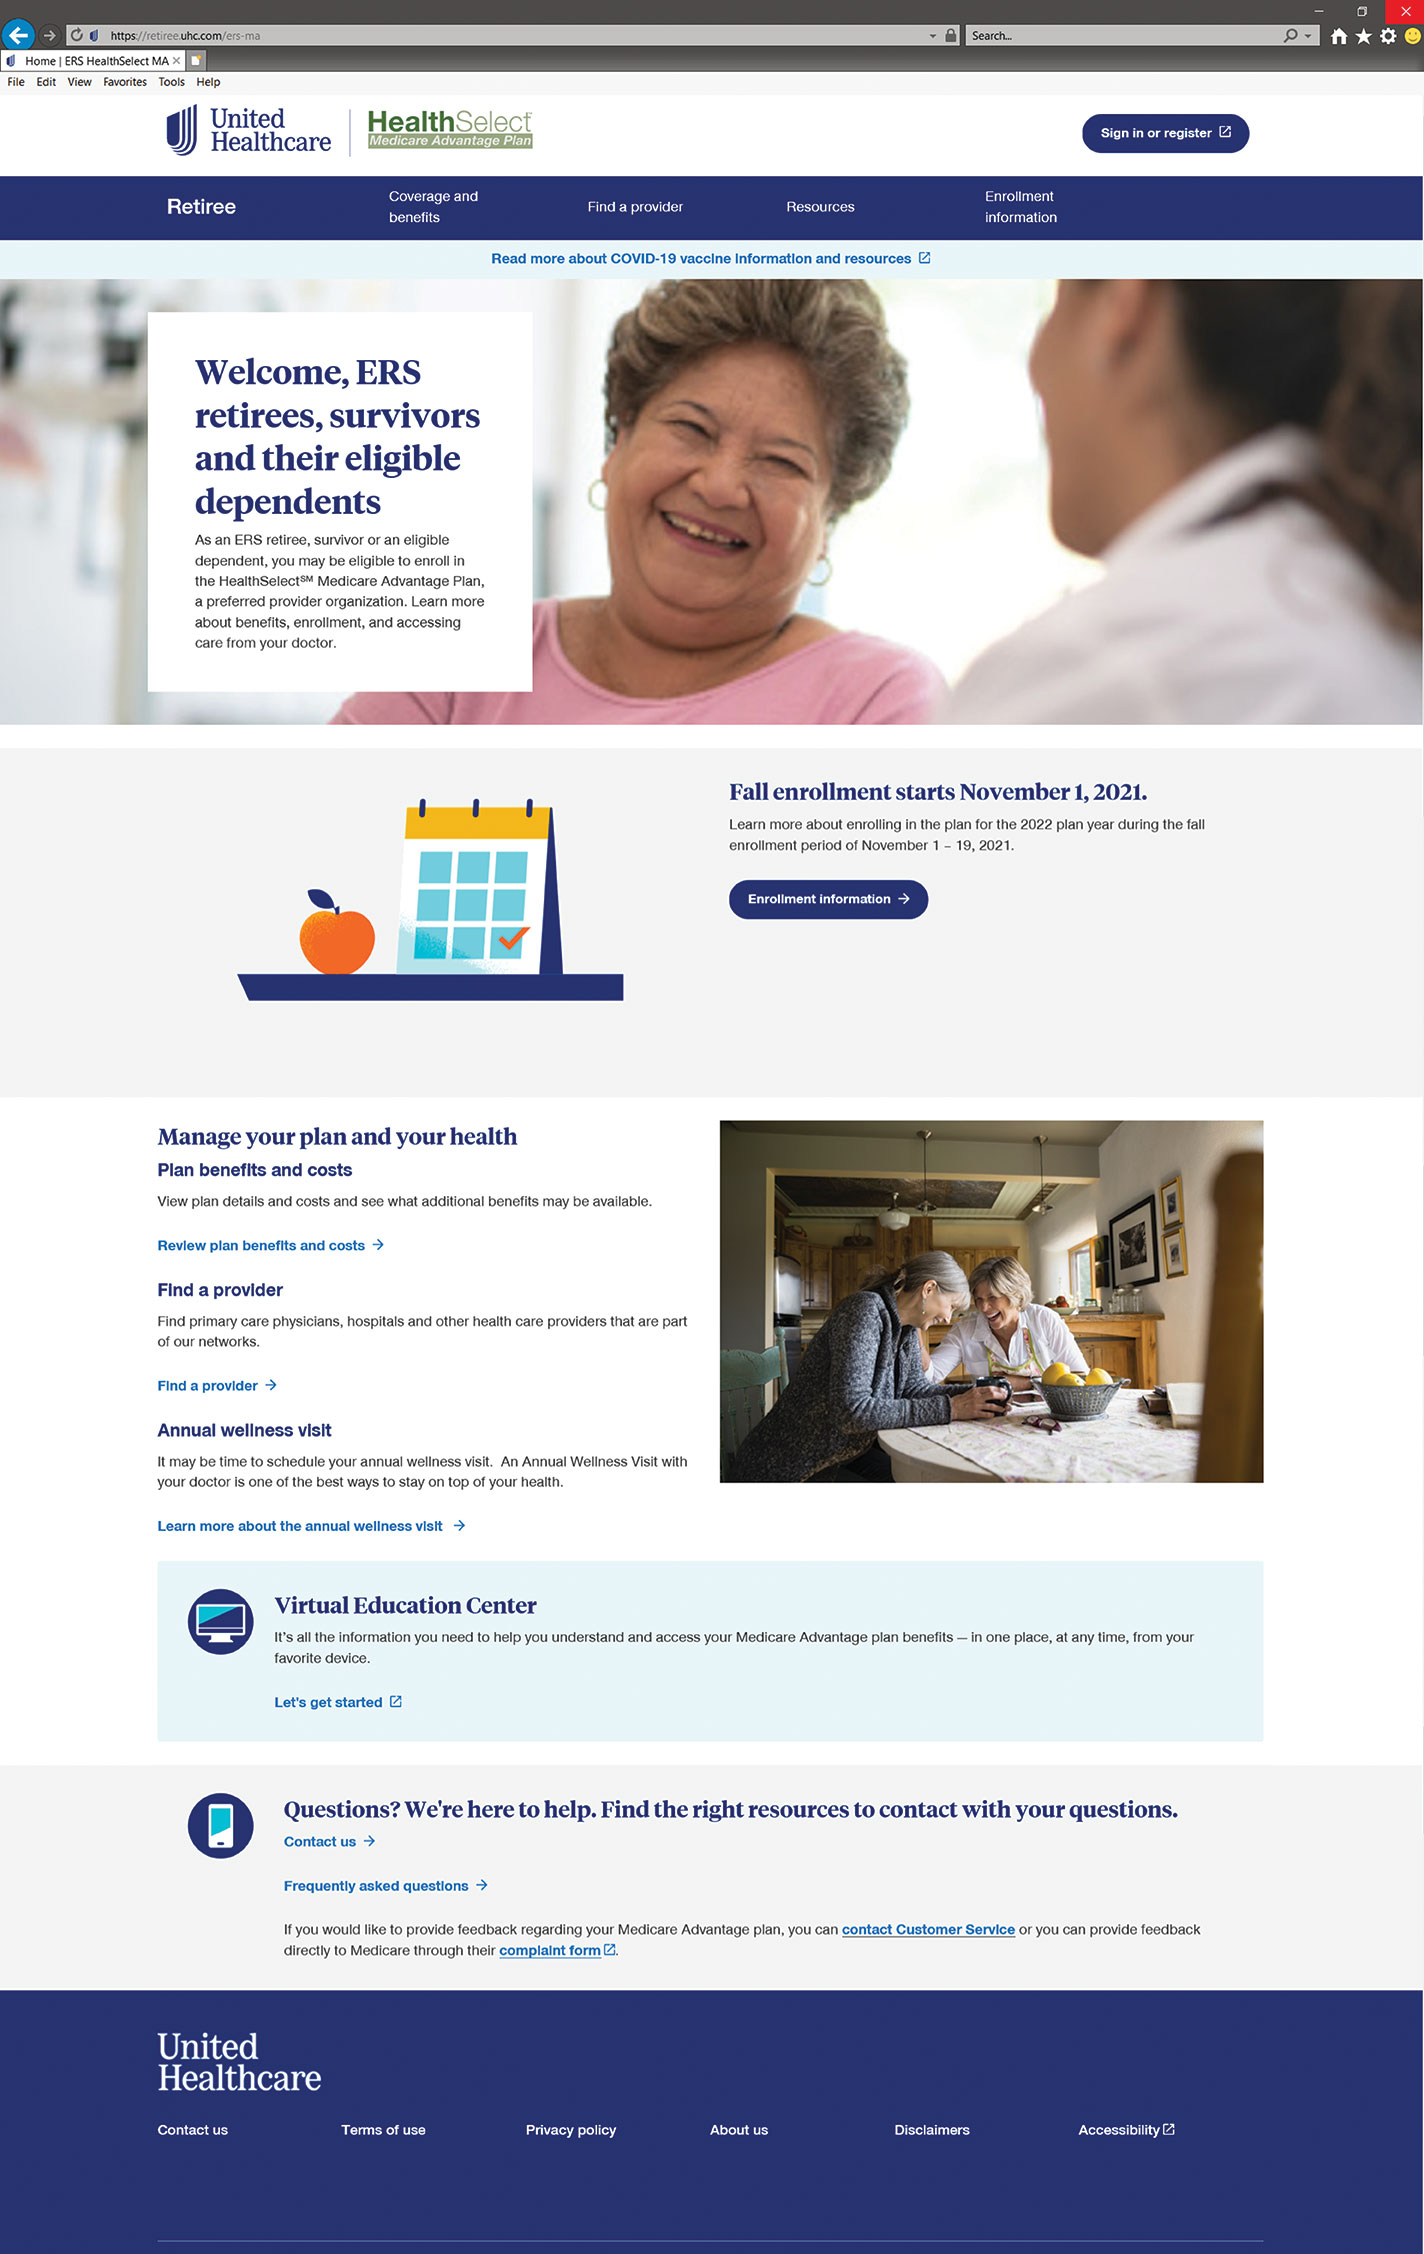 HealthSelectMA PPO refreshed website